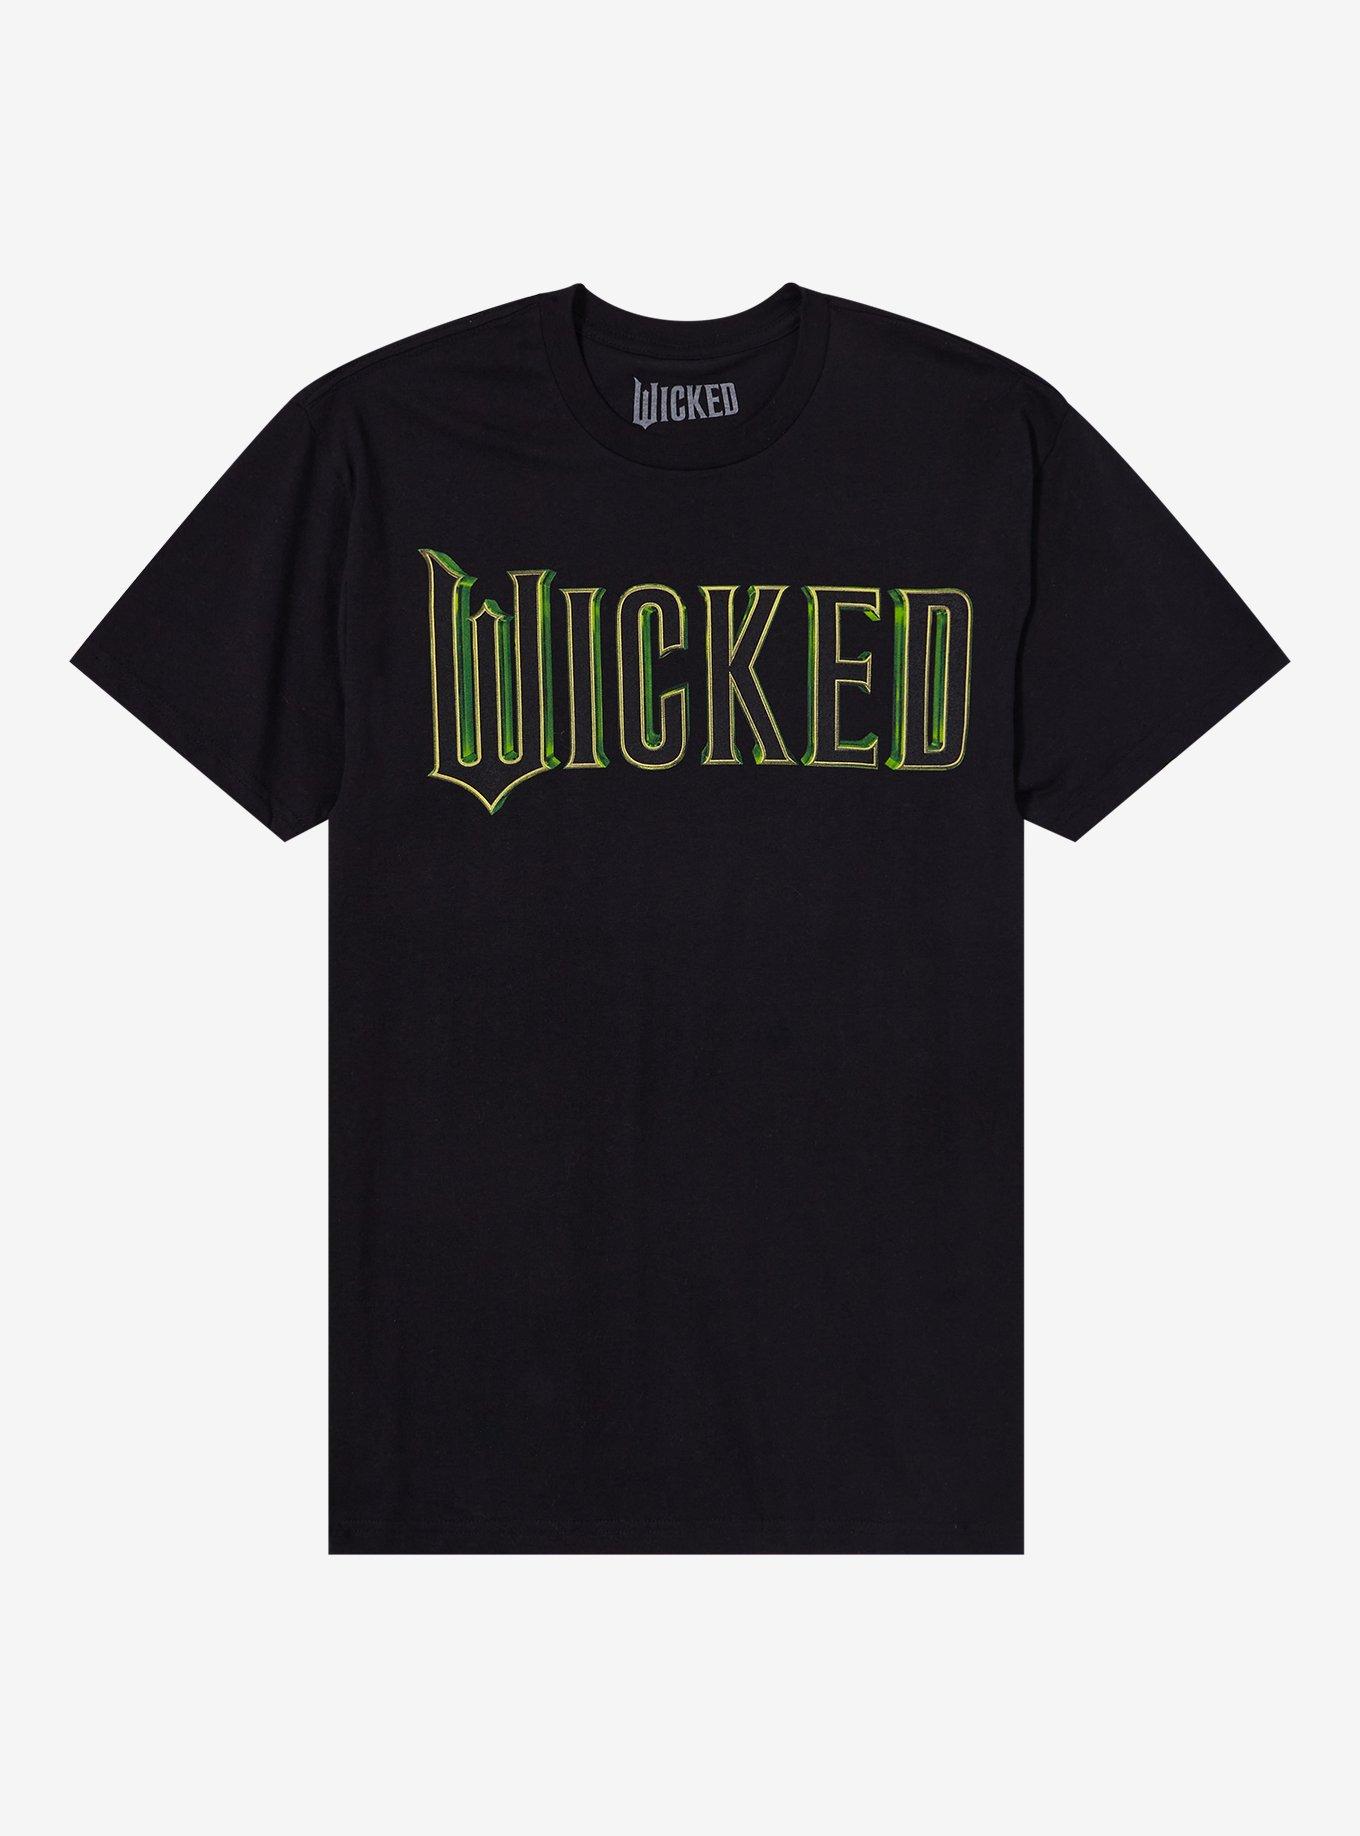 Wicked Logo T-Shirt